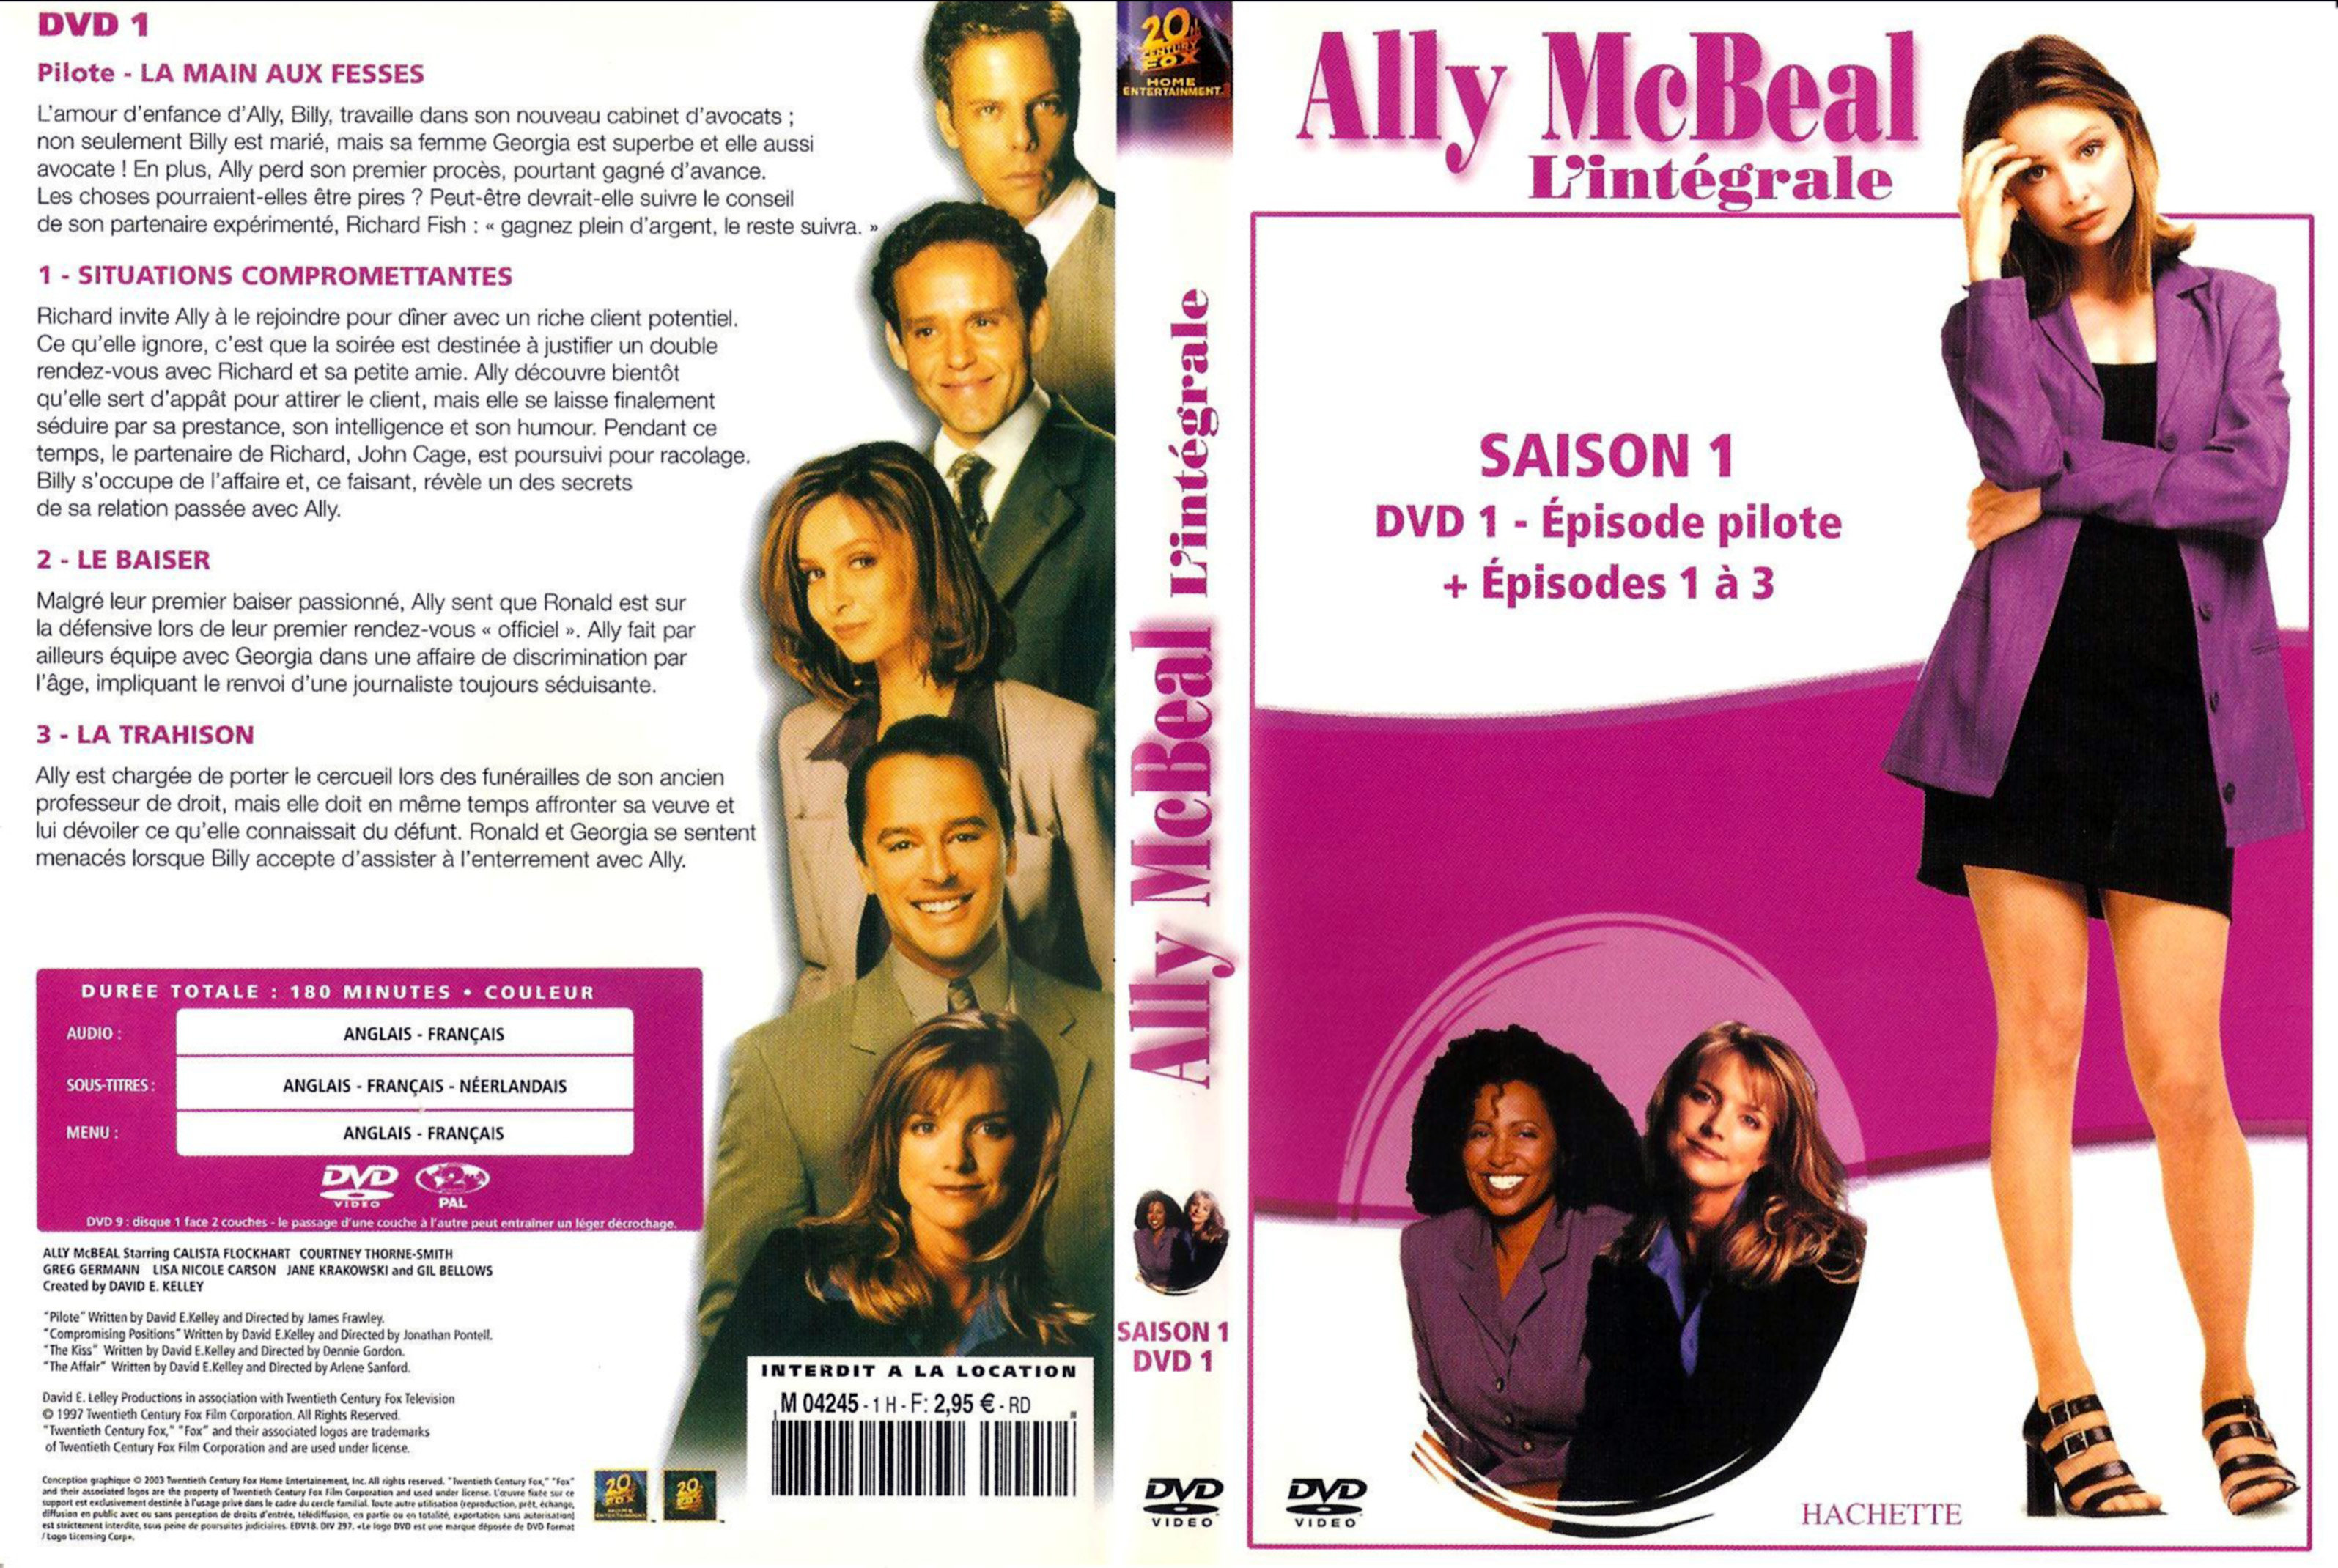 Jaquette DVD Ally McBeal Saison 1 DVD 1 v2